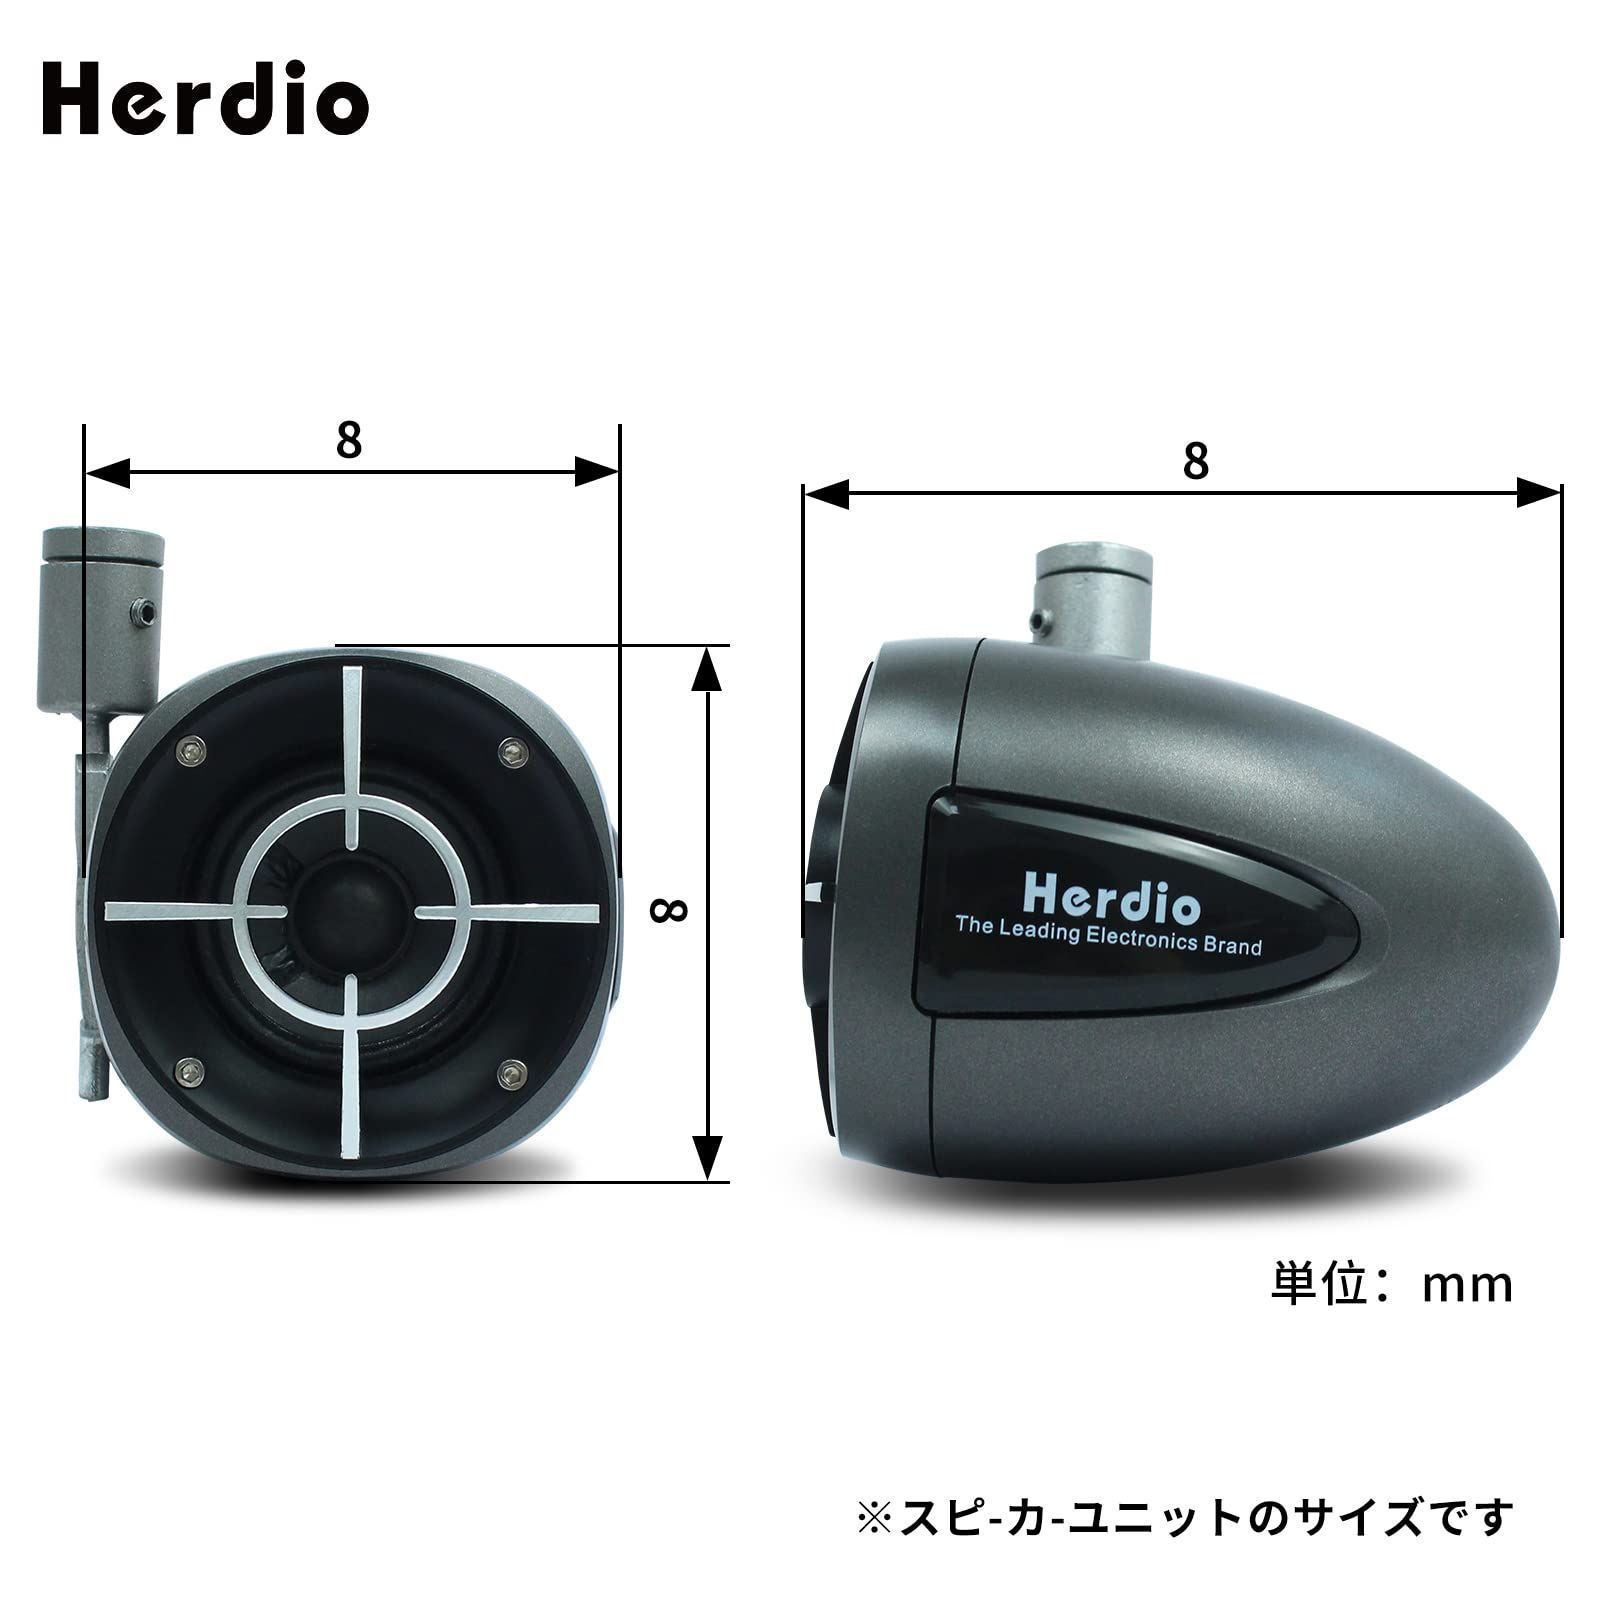 Herdio 100W車のサテライトスピーカー 小型吊り下げ式のスピーカー